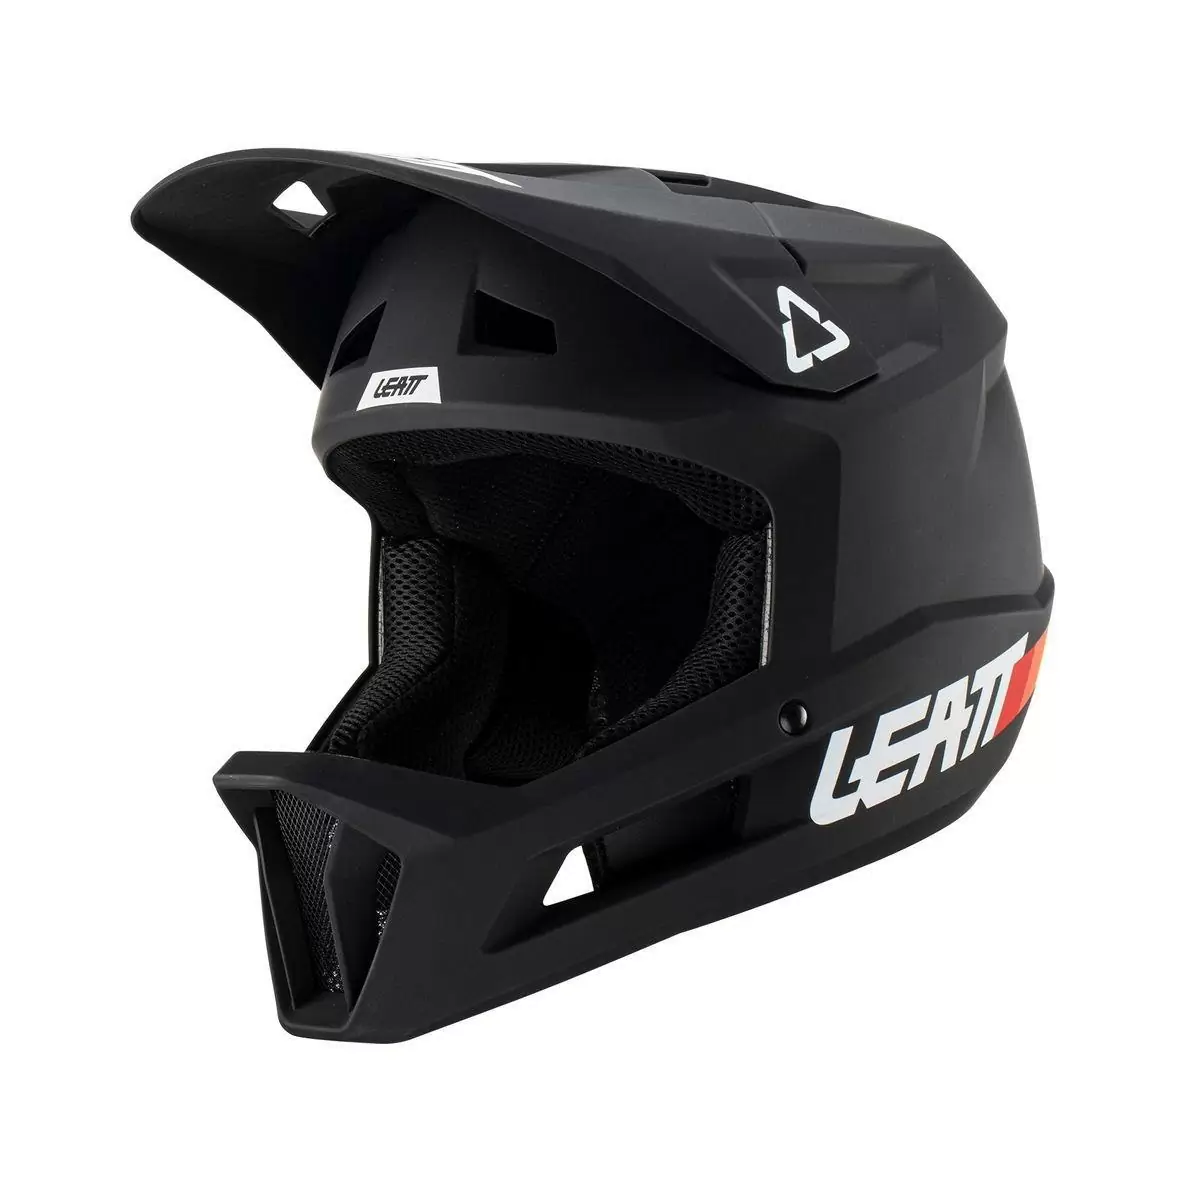 Gravity 1.0 Kids MTB Fullface Helmet Stealth Black Size XXS (51-52cm) - image